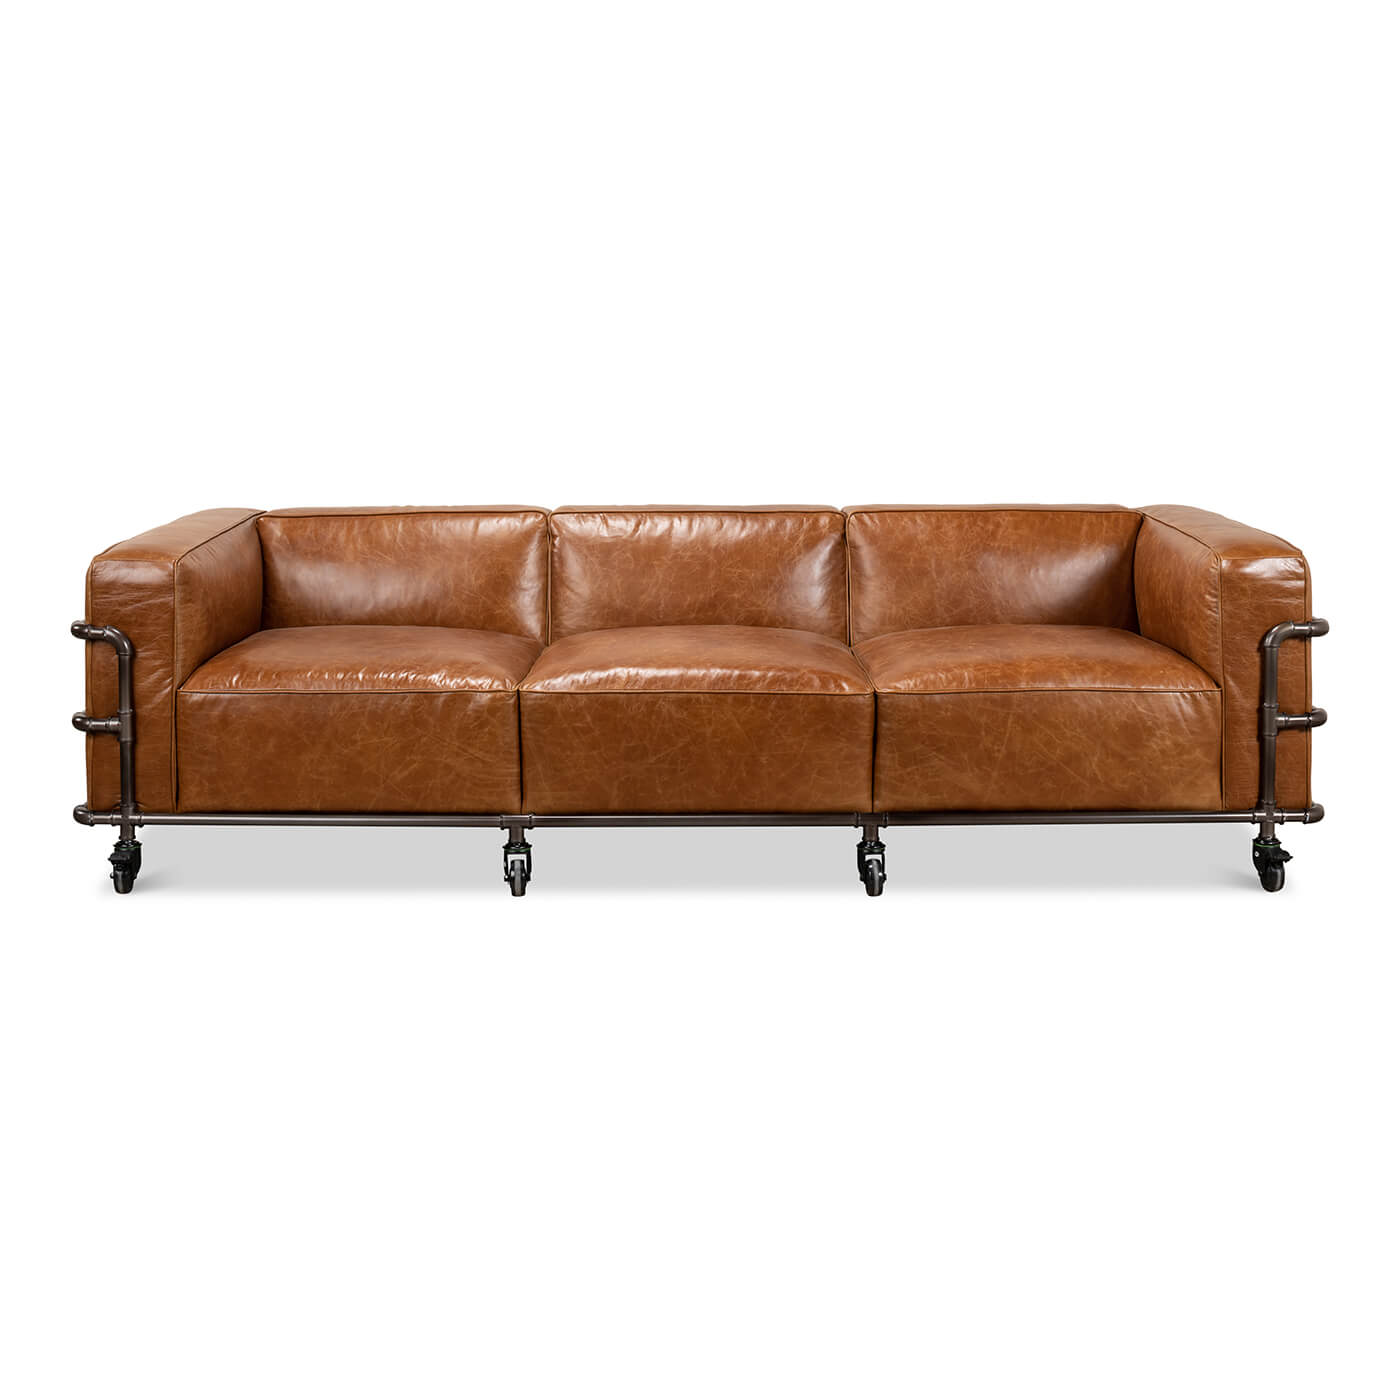 British Industrial Leather Sofa - English Georgian America